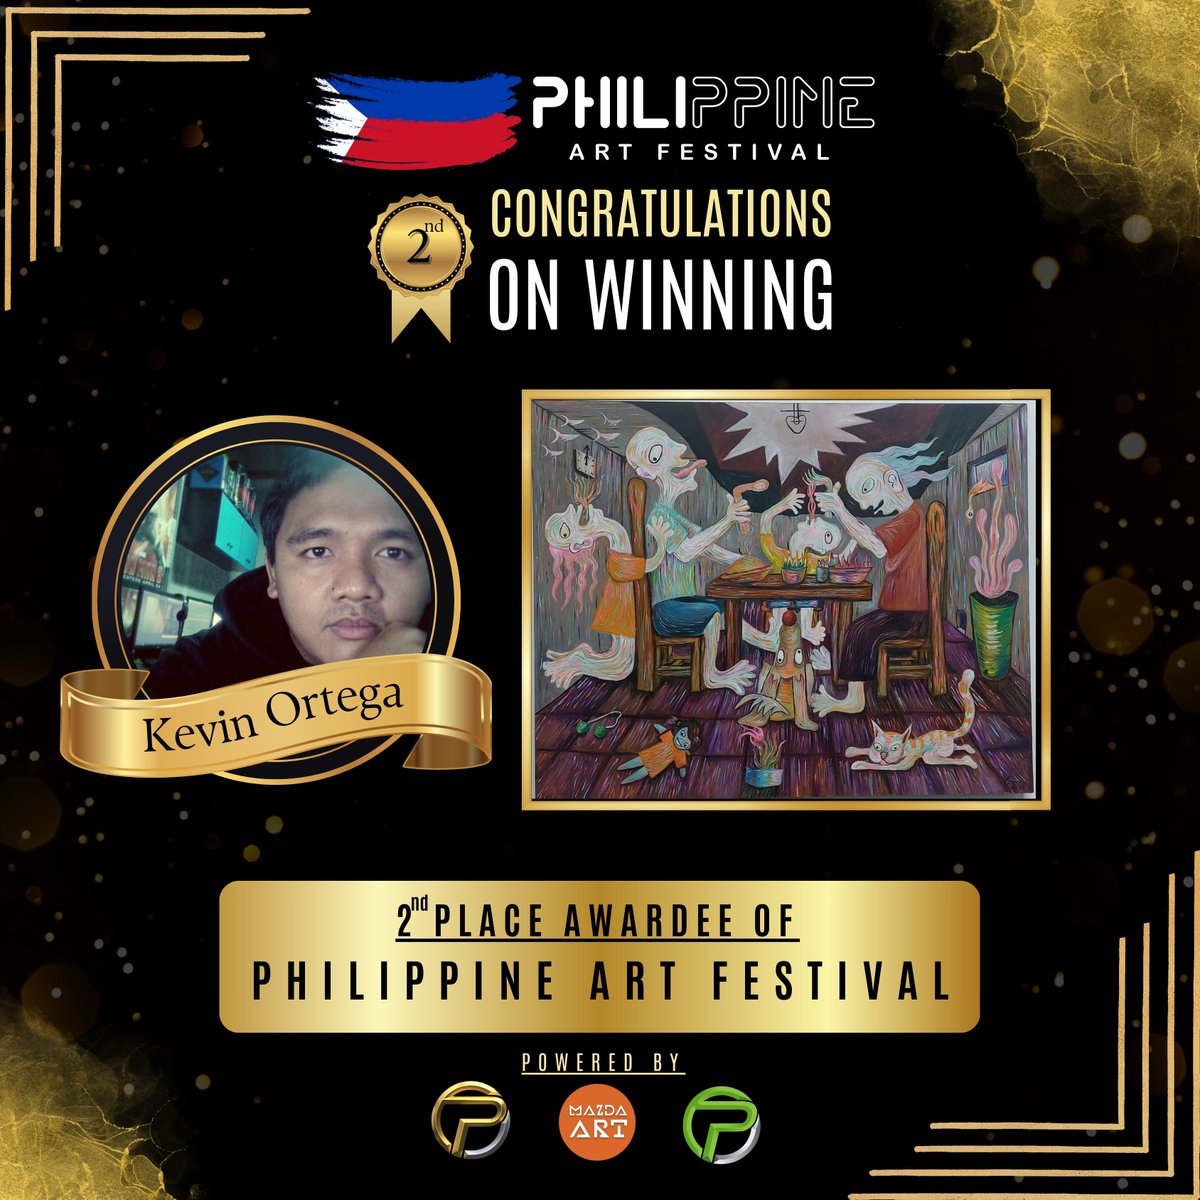 Congratulations Kevin Ortega!

#PhilippineArtFestival #Artfestival #artevent #artfest #artists #Filipinoart #Filipinoartists #Filipino #ArtinPhilippines #Philippines #Philippineartist #celebratingart #artists #artist